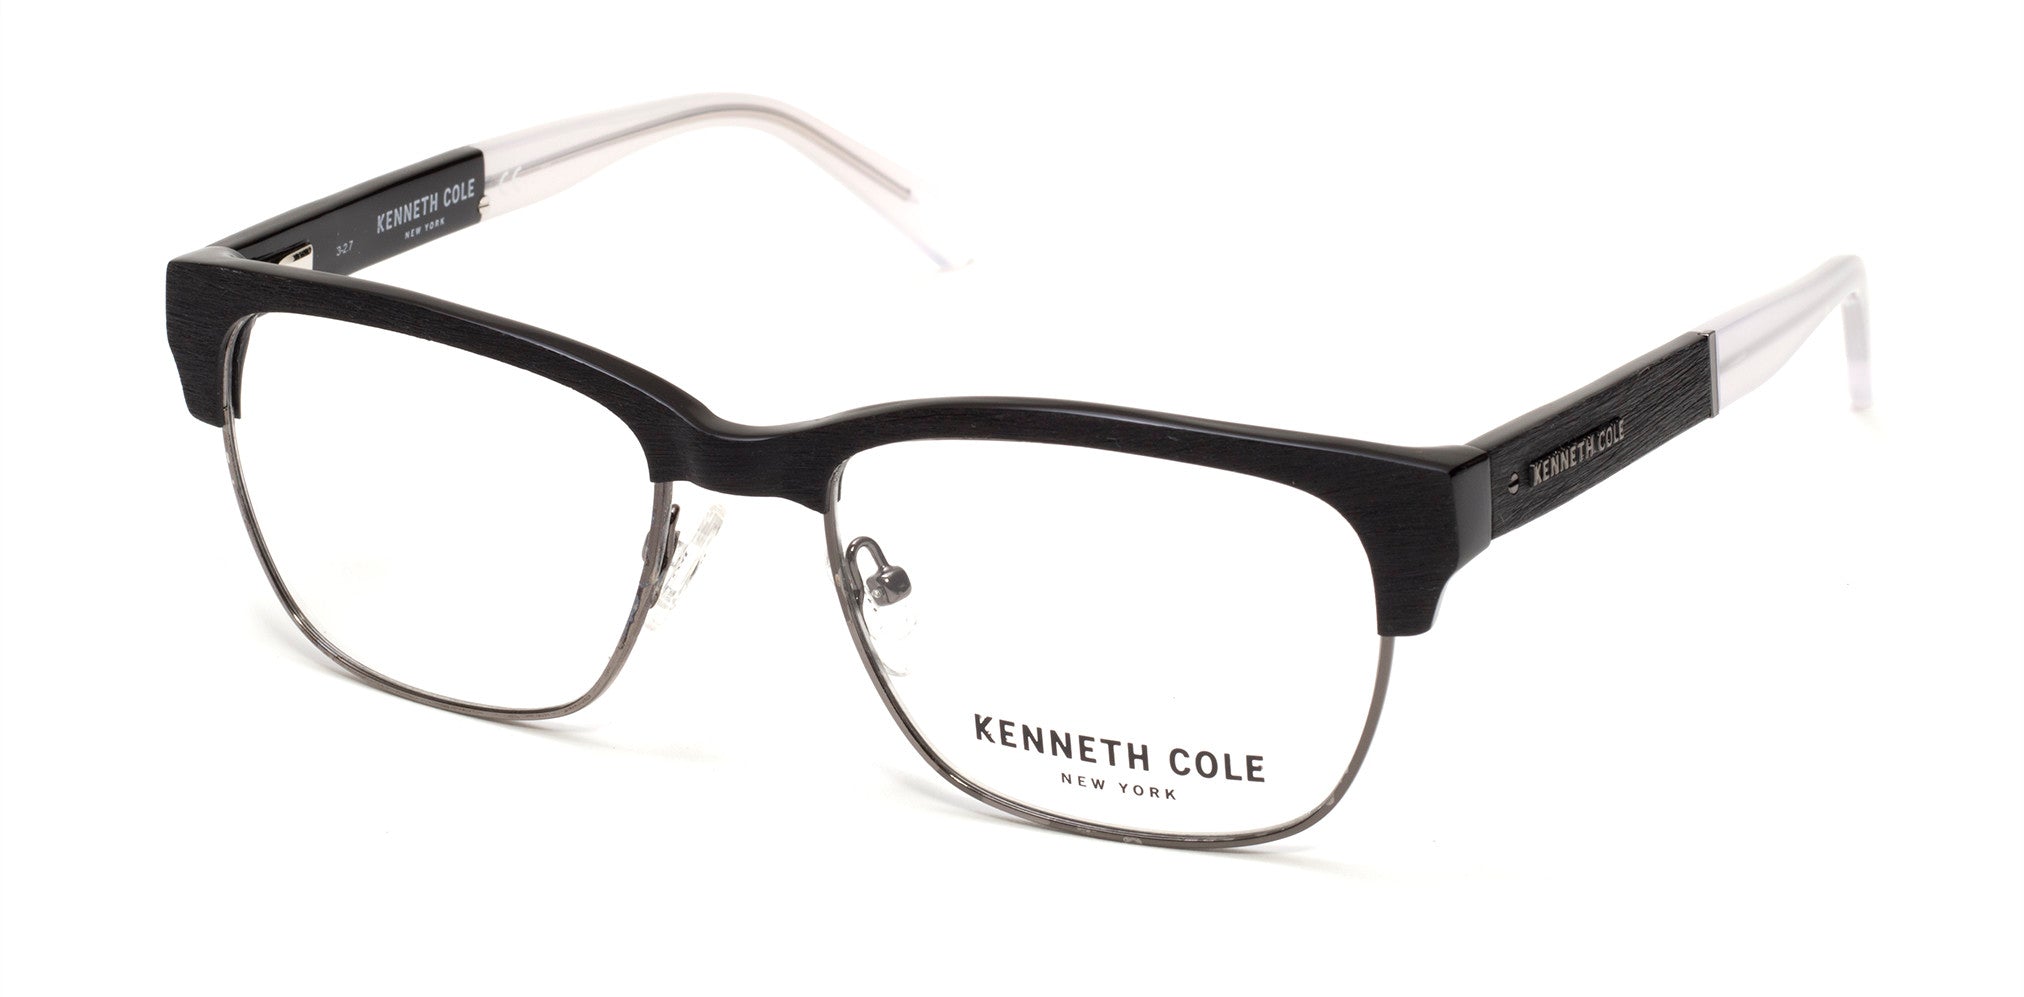 Kenneth Cole New York,Kenneth Cole Reaction KC0284 Geometric Eyeglasses 001-001 - Shiny Black